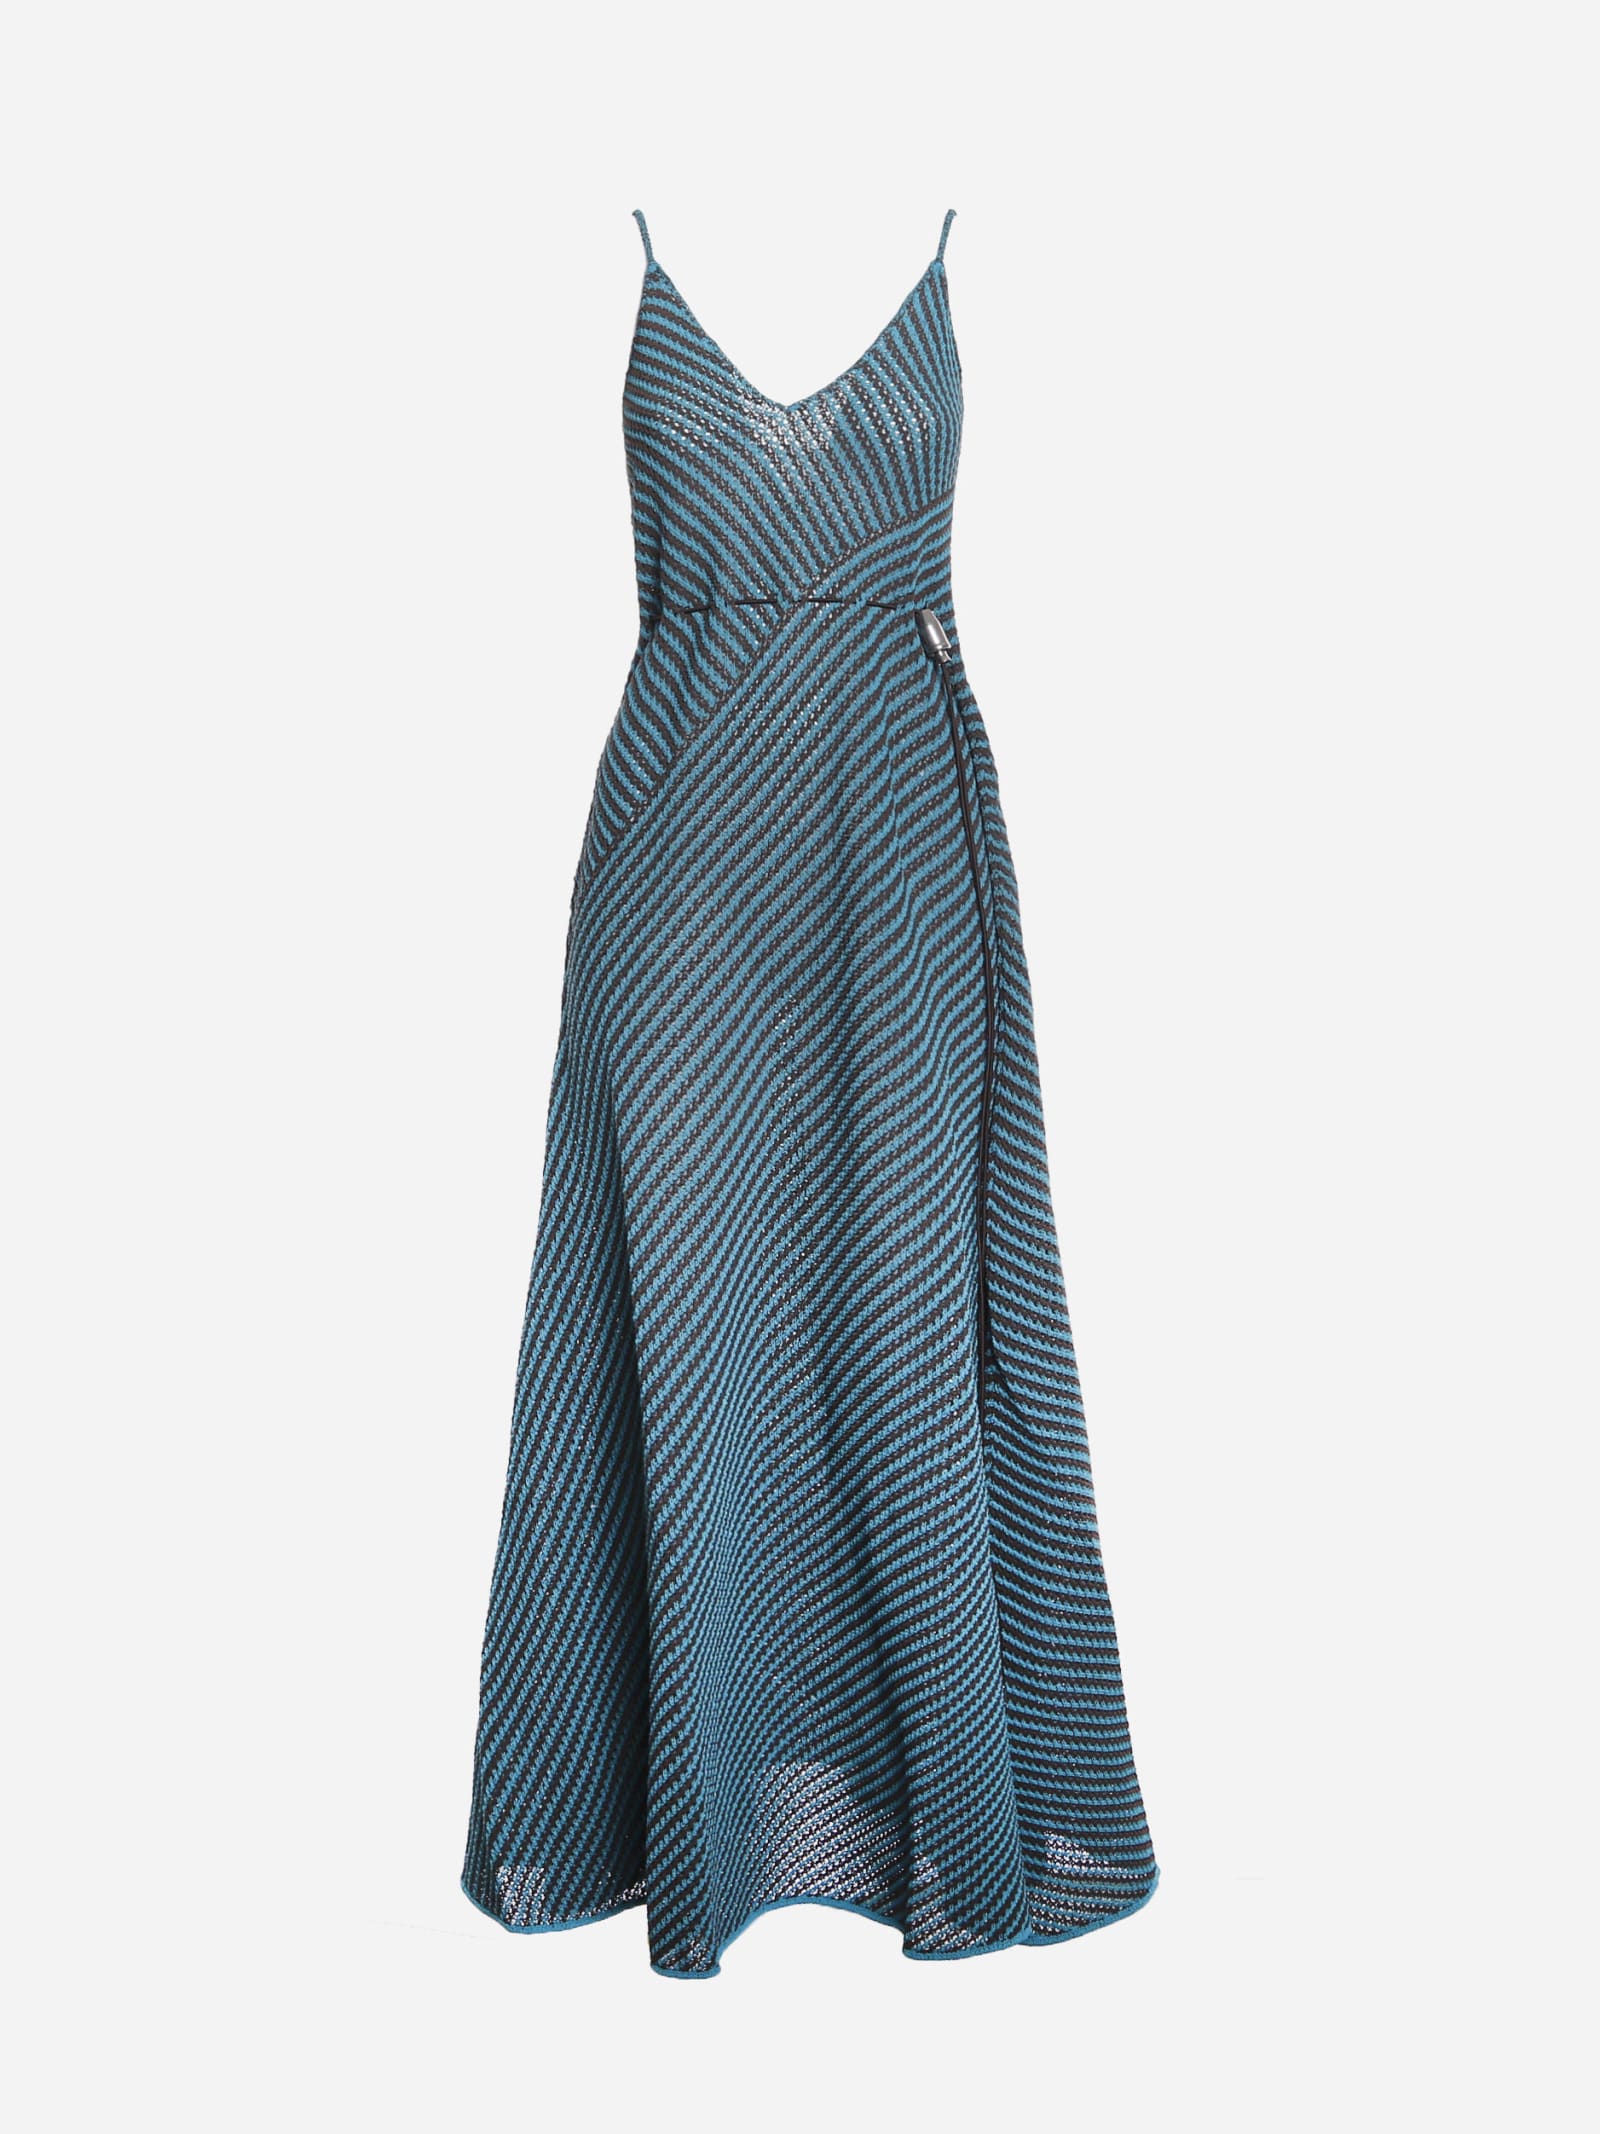 Bottega Veneta Cotton Knit Dress With Striped Pattern | Coshio Online Shop